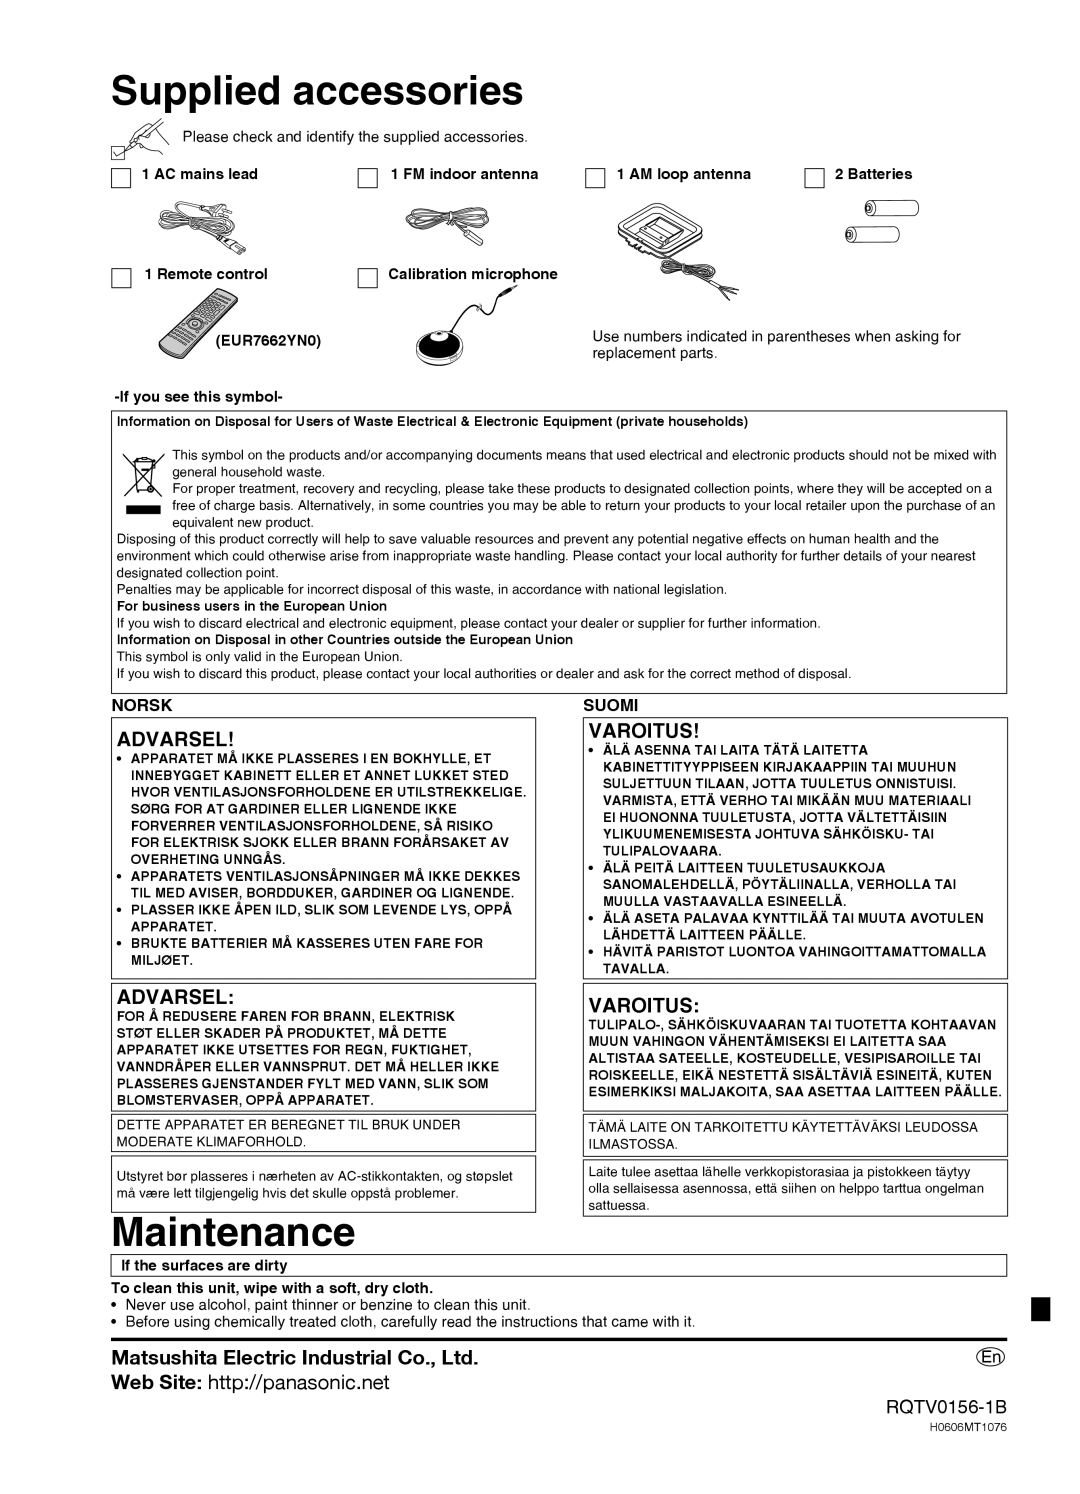 Panasonic SA-XR58 manual Supplied accessories, Maintenance, Advarsel, Varoitus, RQTV0156-1B 